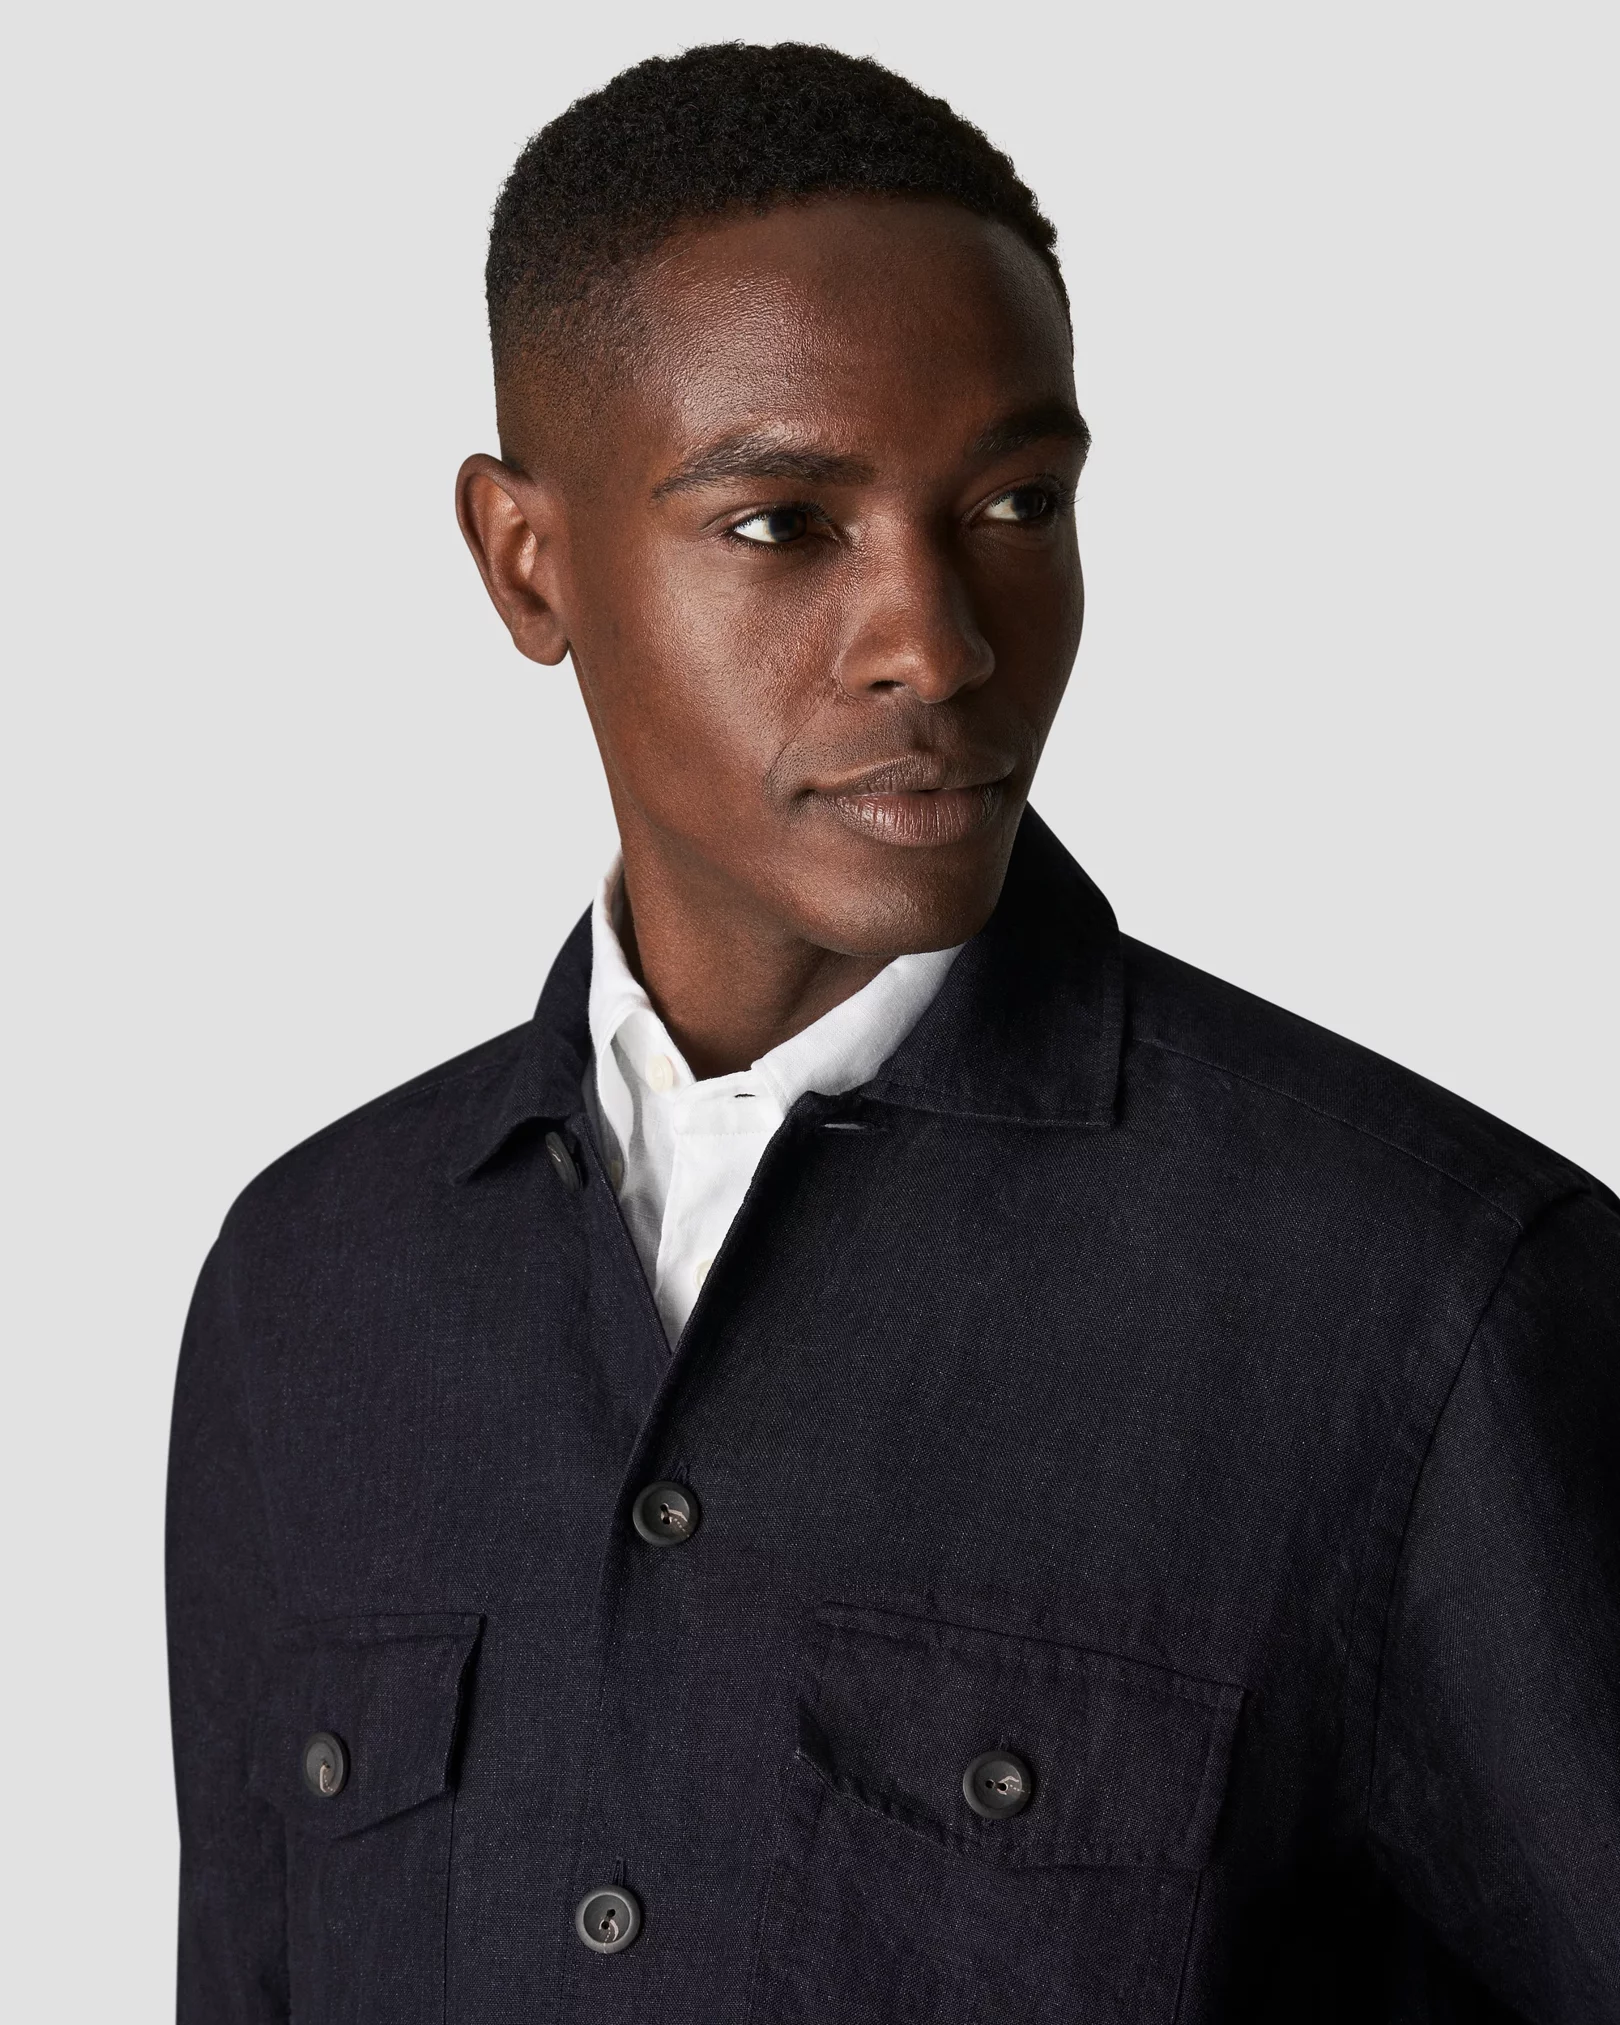 Eton - navy blue linen overshirt